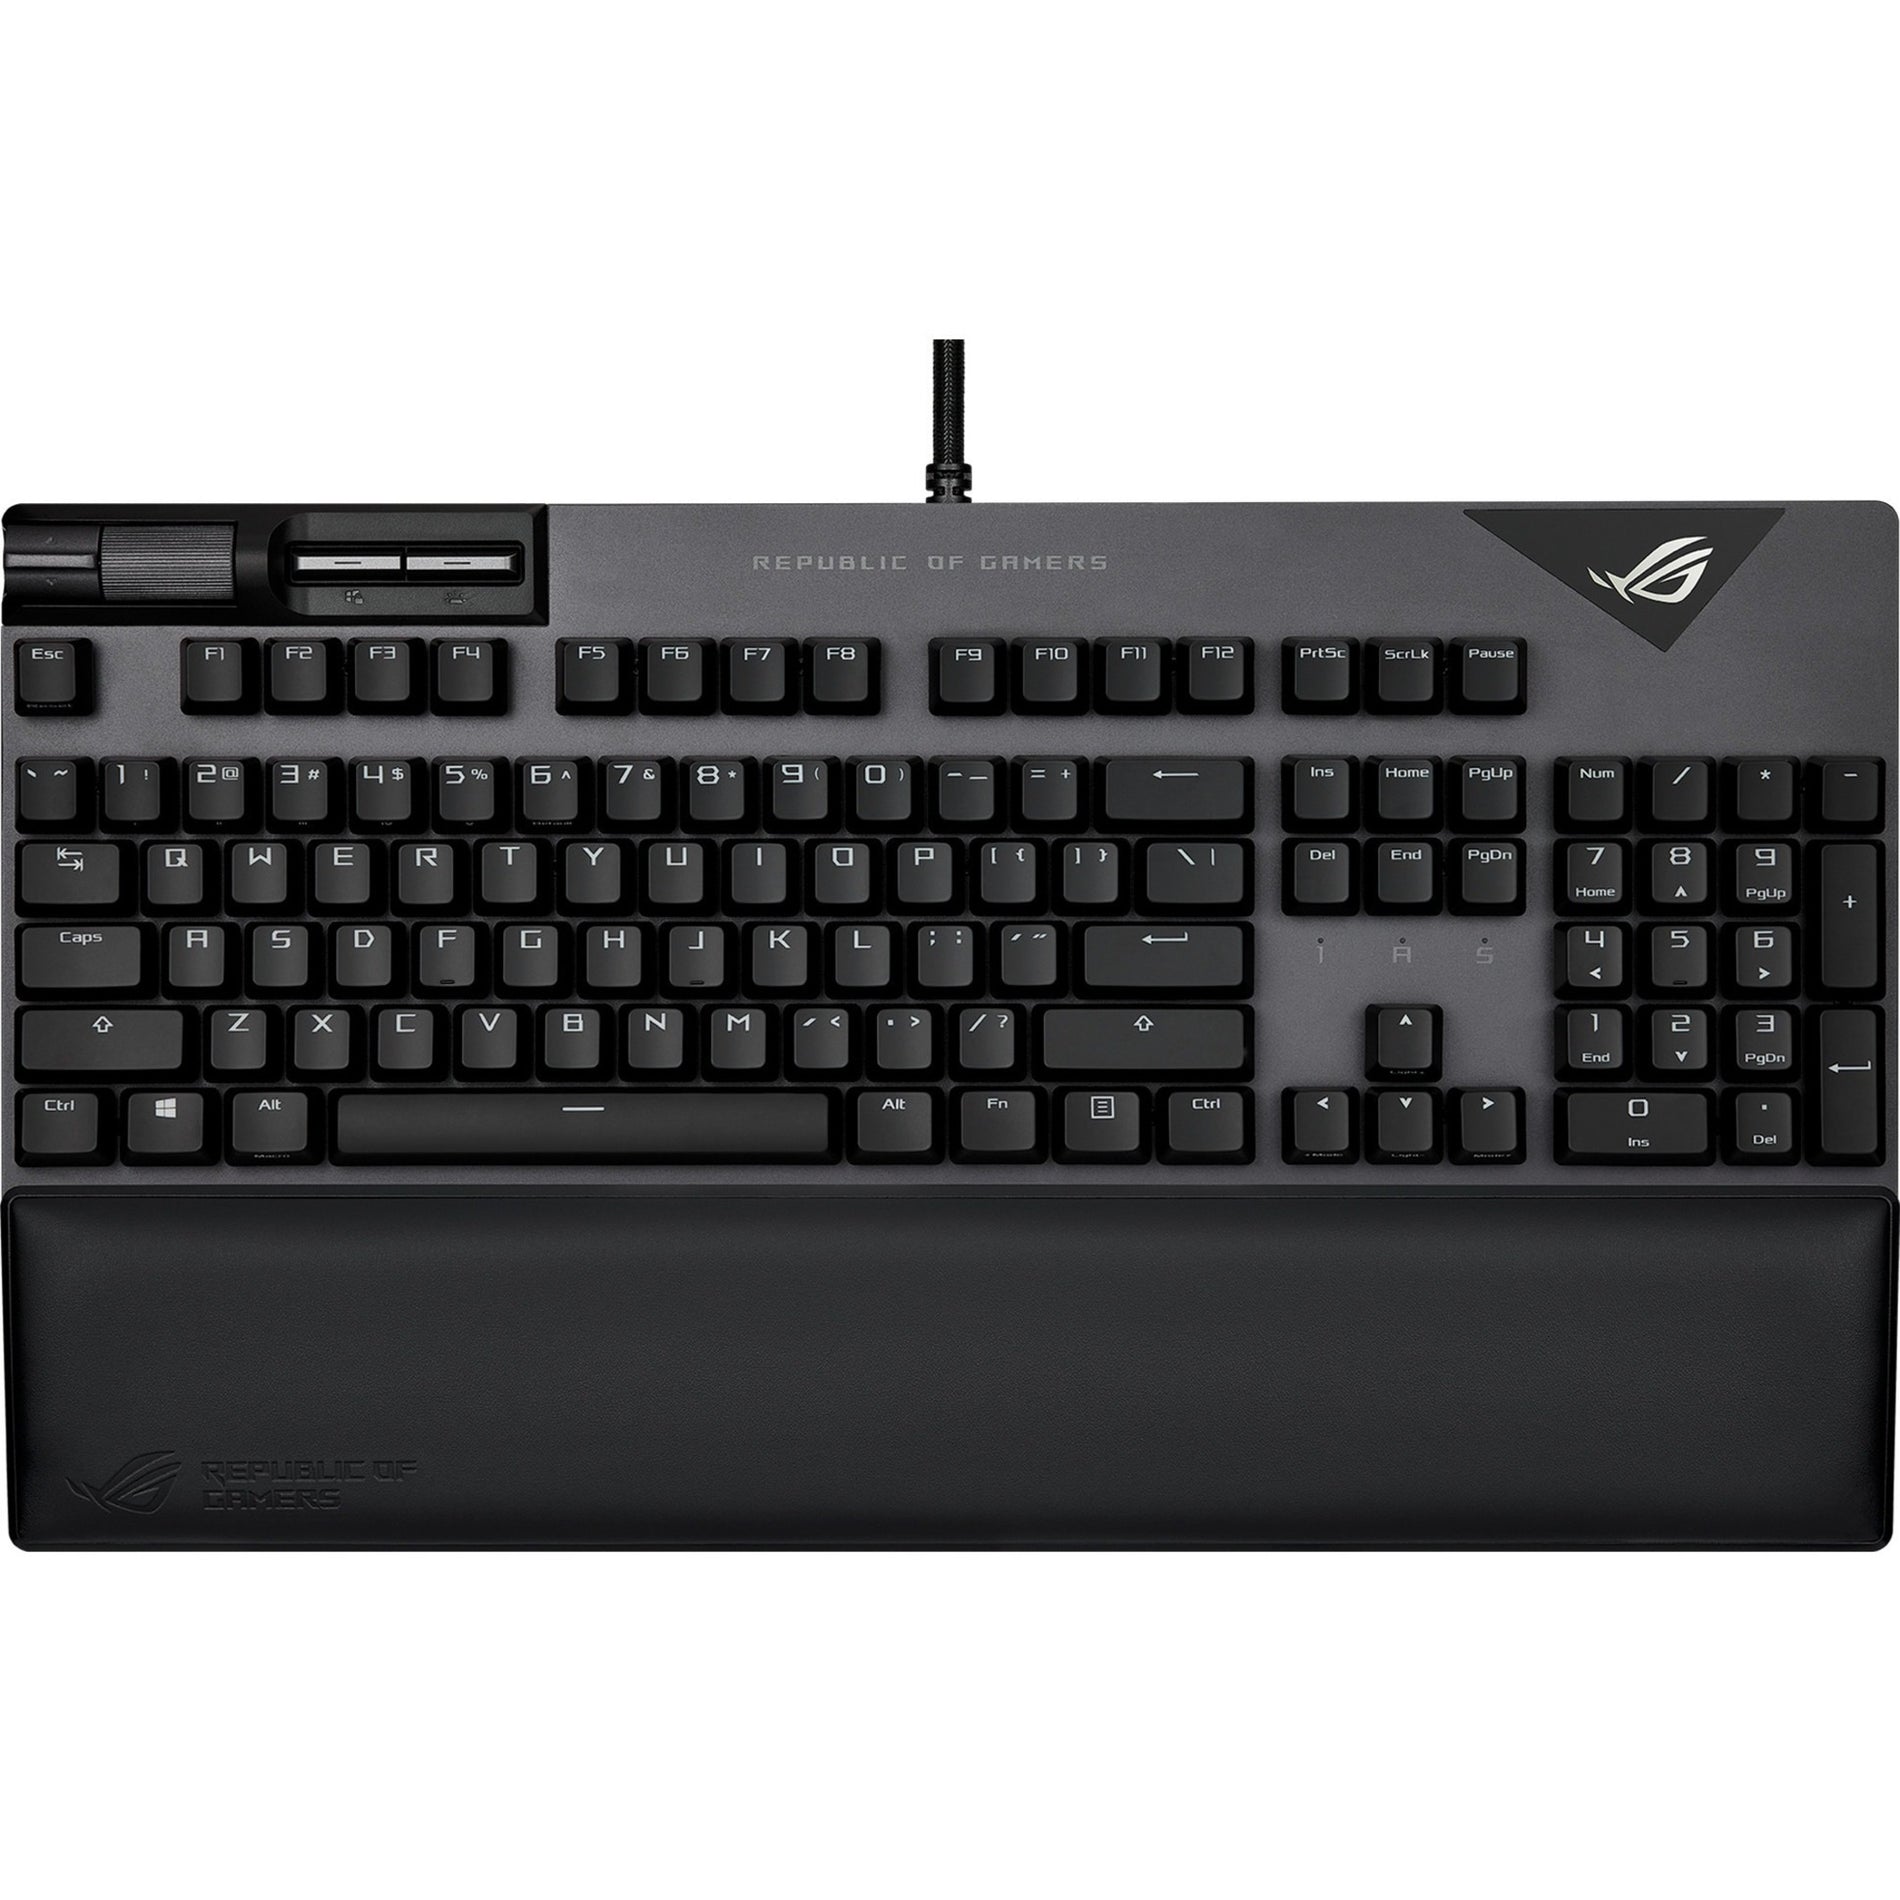 Asus XA08 STRIX FLARE II/NXBL/US/PBT Strix Flare II Gaming Keyboard, RGB LED Backlight, Mechanical Keys, USB 2.0